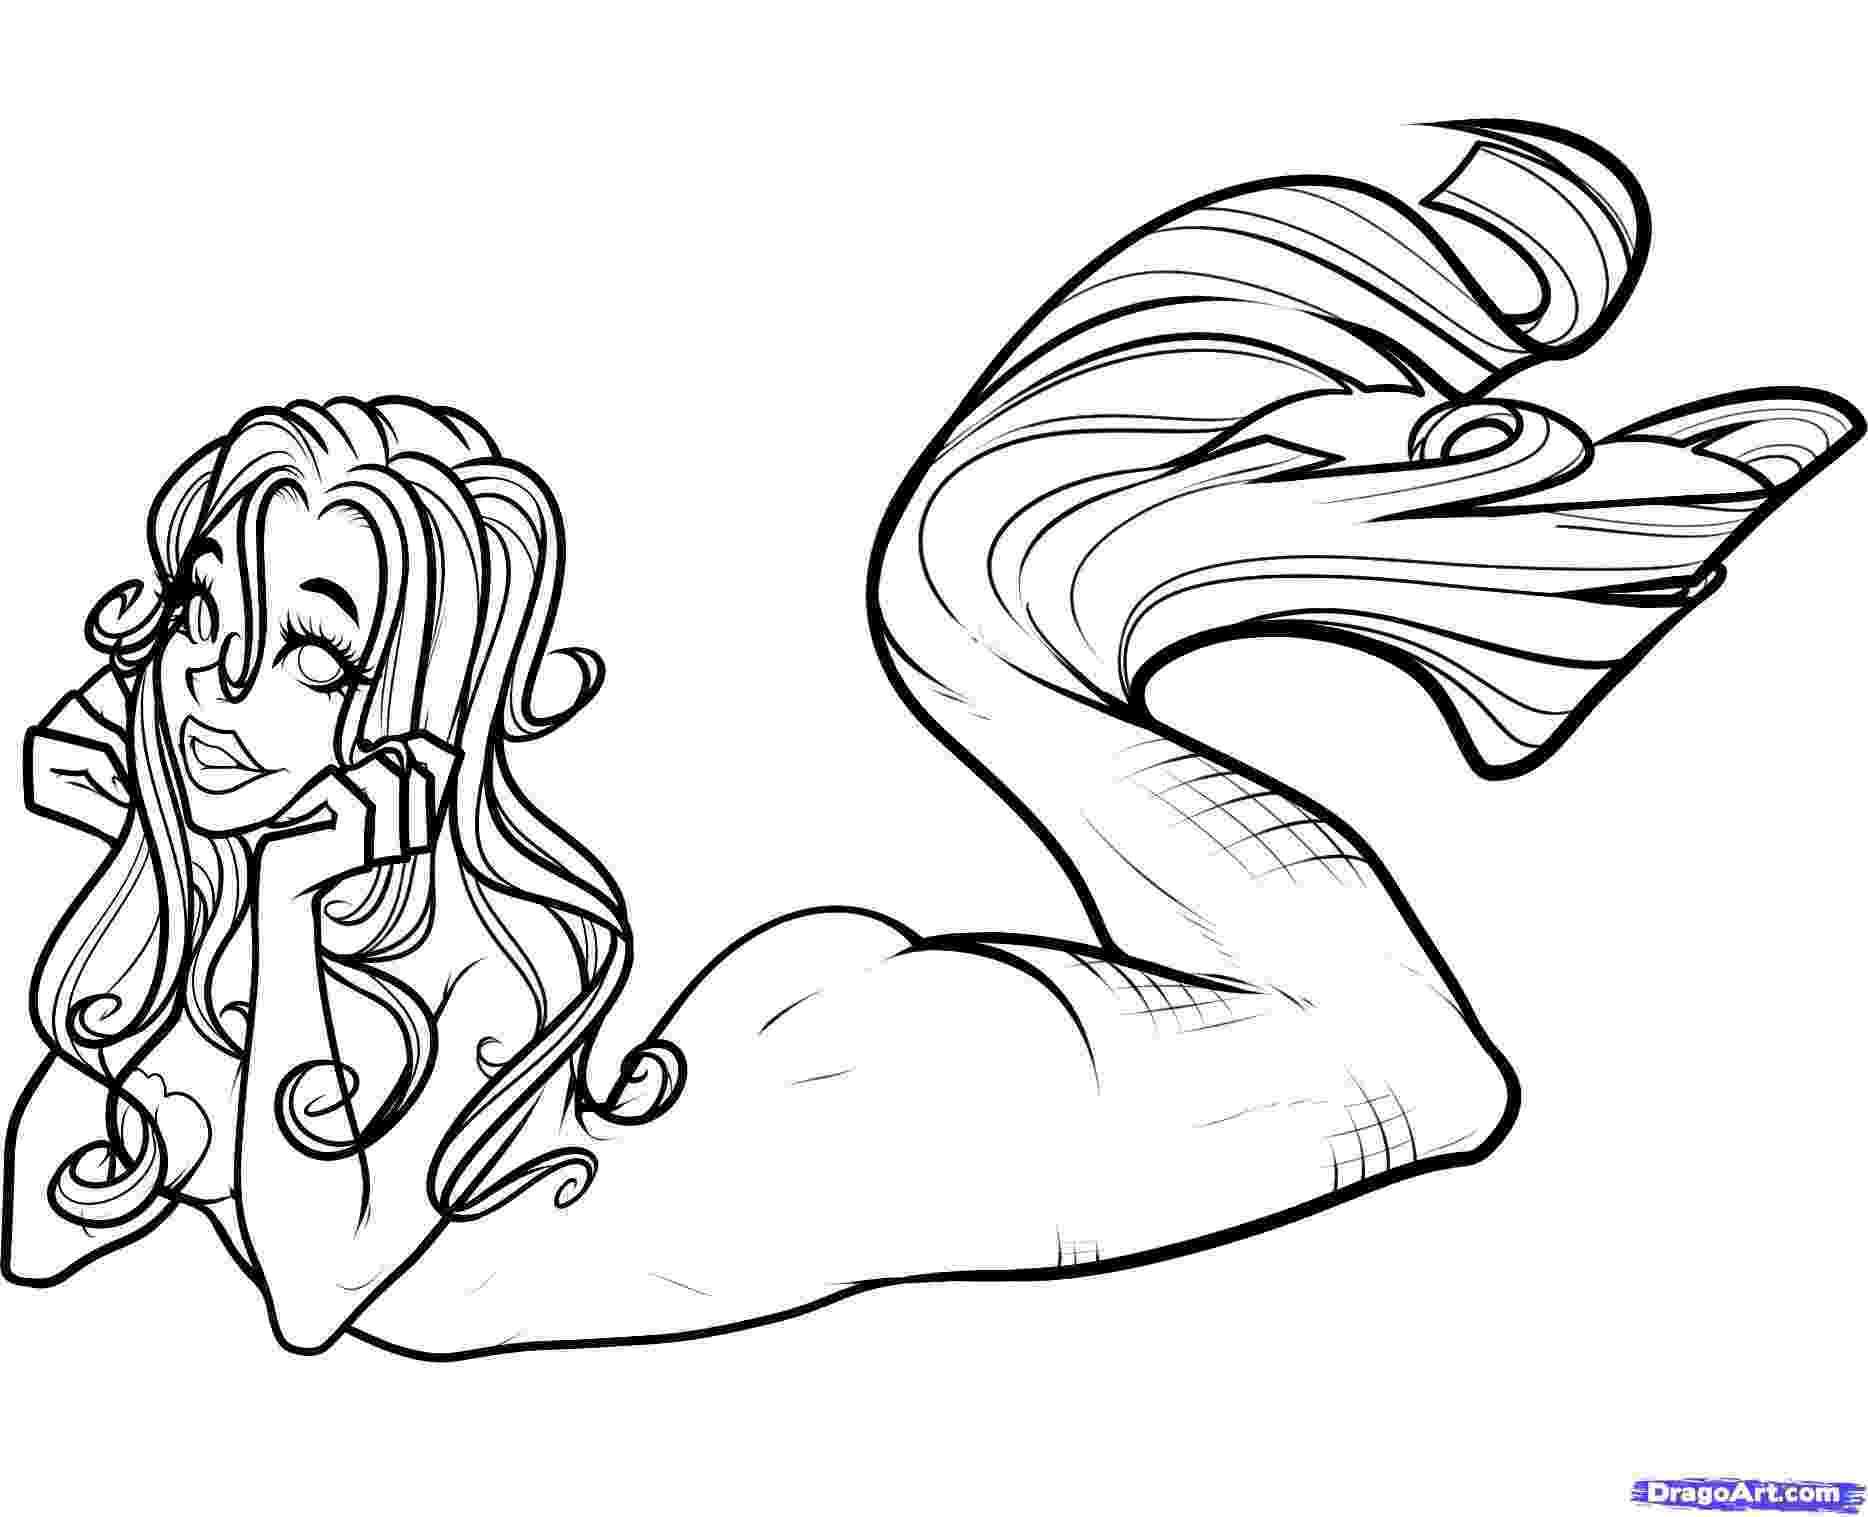 mermaids to draw how to draw a mermaid fantasy mermaid step 10 random draw mermaids to 